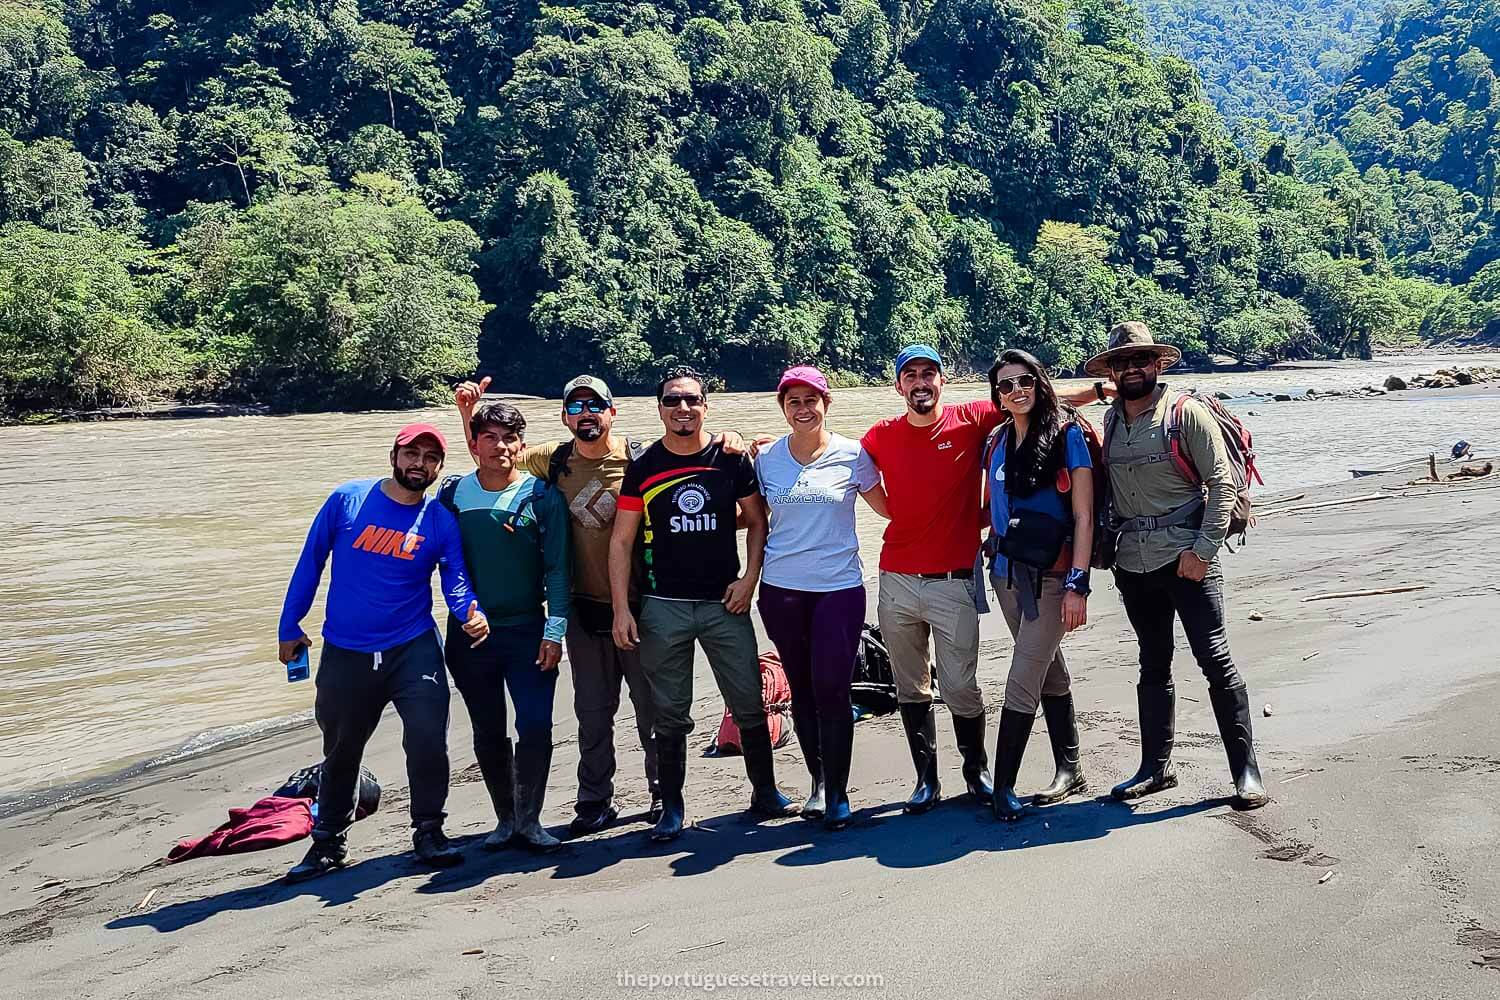 The group at Puerto Yuquianza before the boat ride, on the Cueva de Los Tayos expedition.